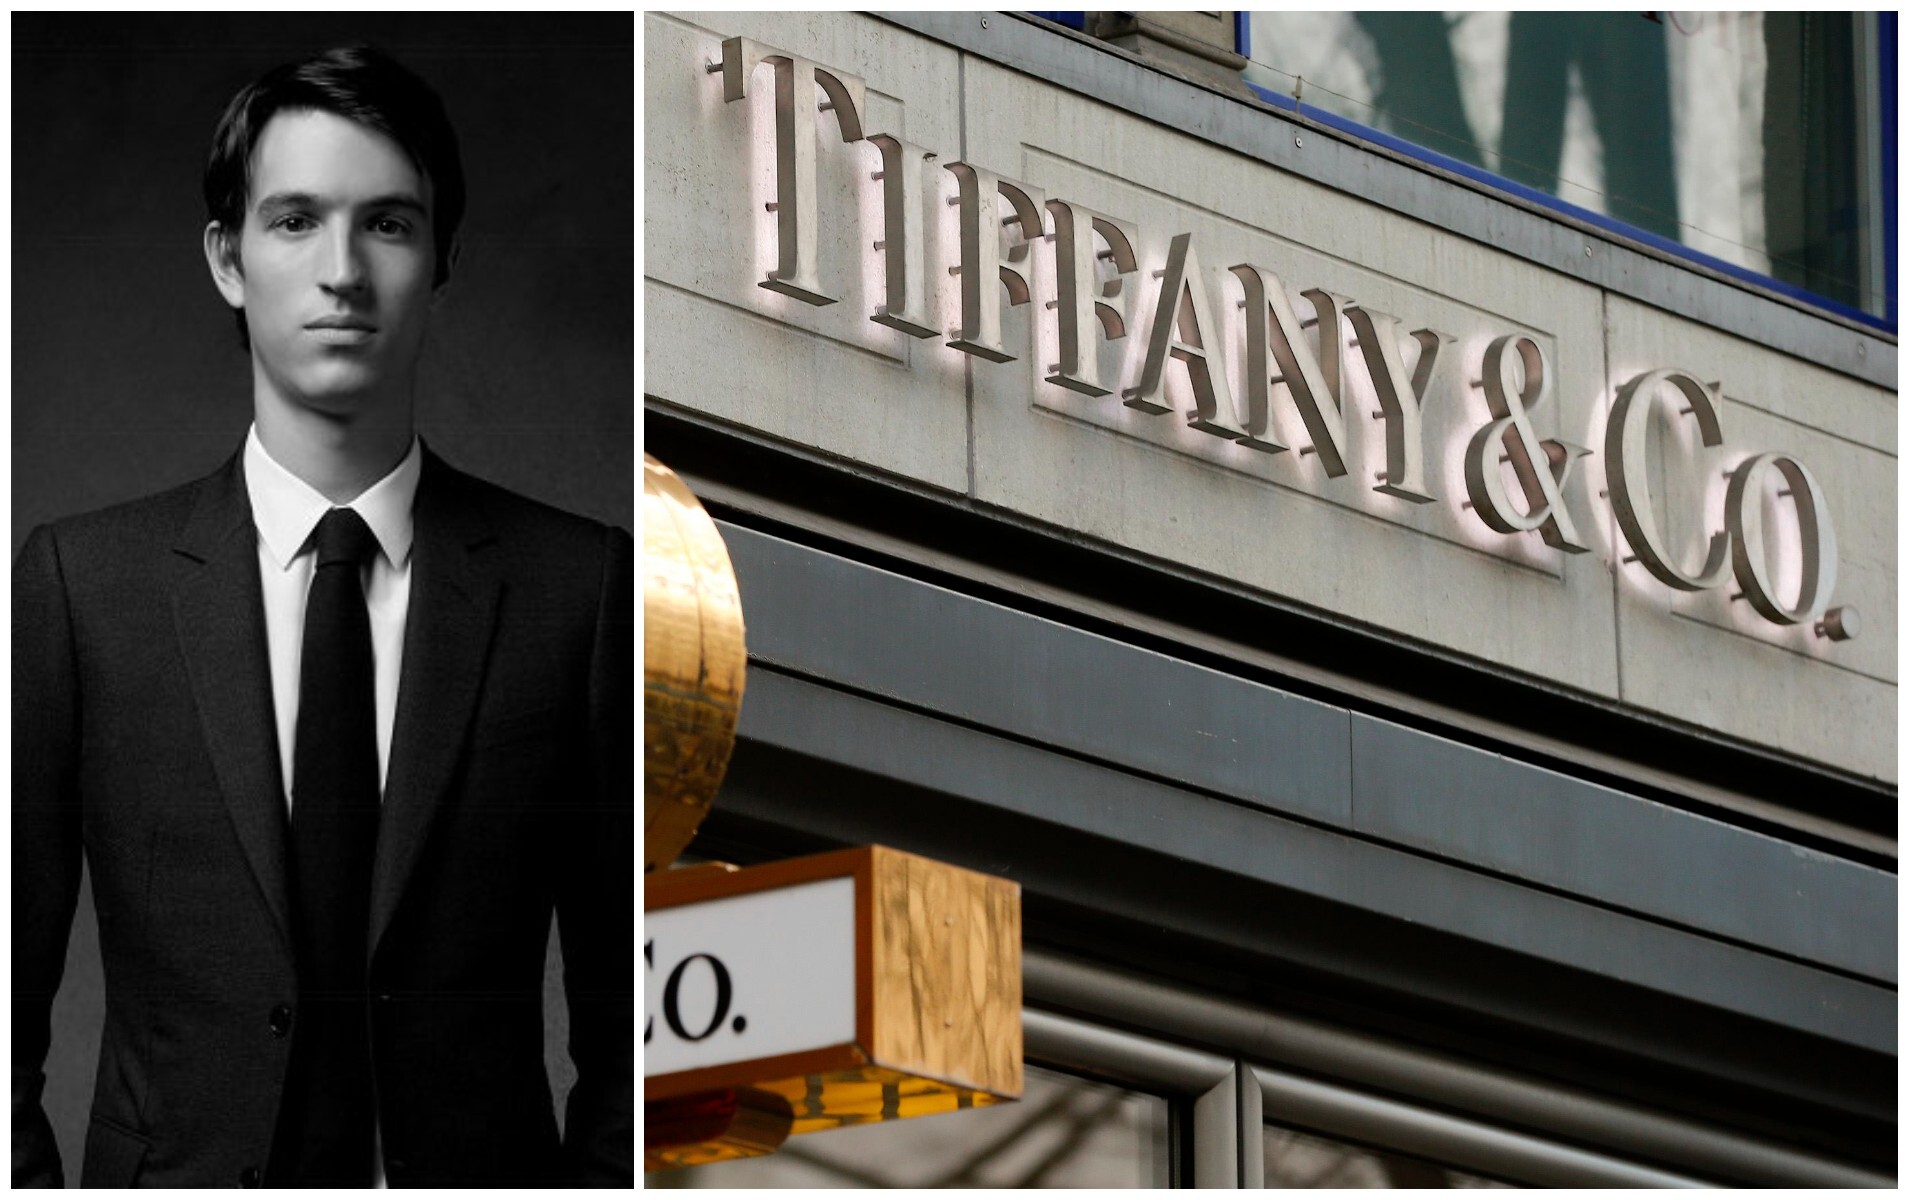 Alexandre Arnault, son of Bernard Arnault, is set to take over management of Tiffany & Co. Photo: @HECParis/Twitter via Reuters